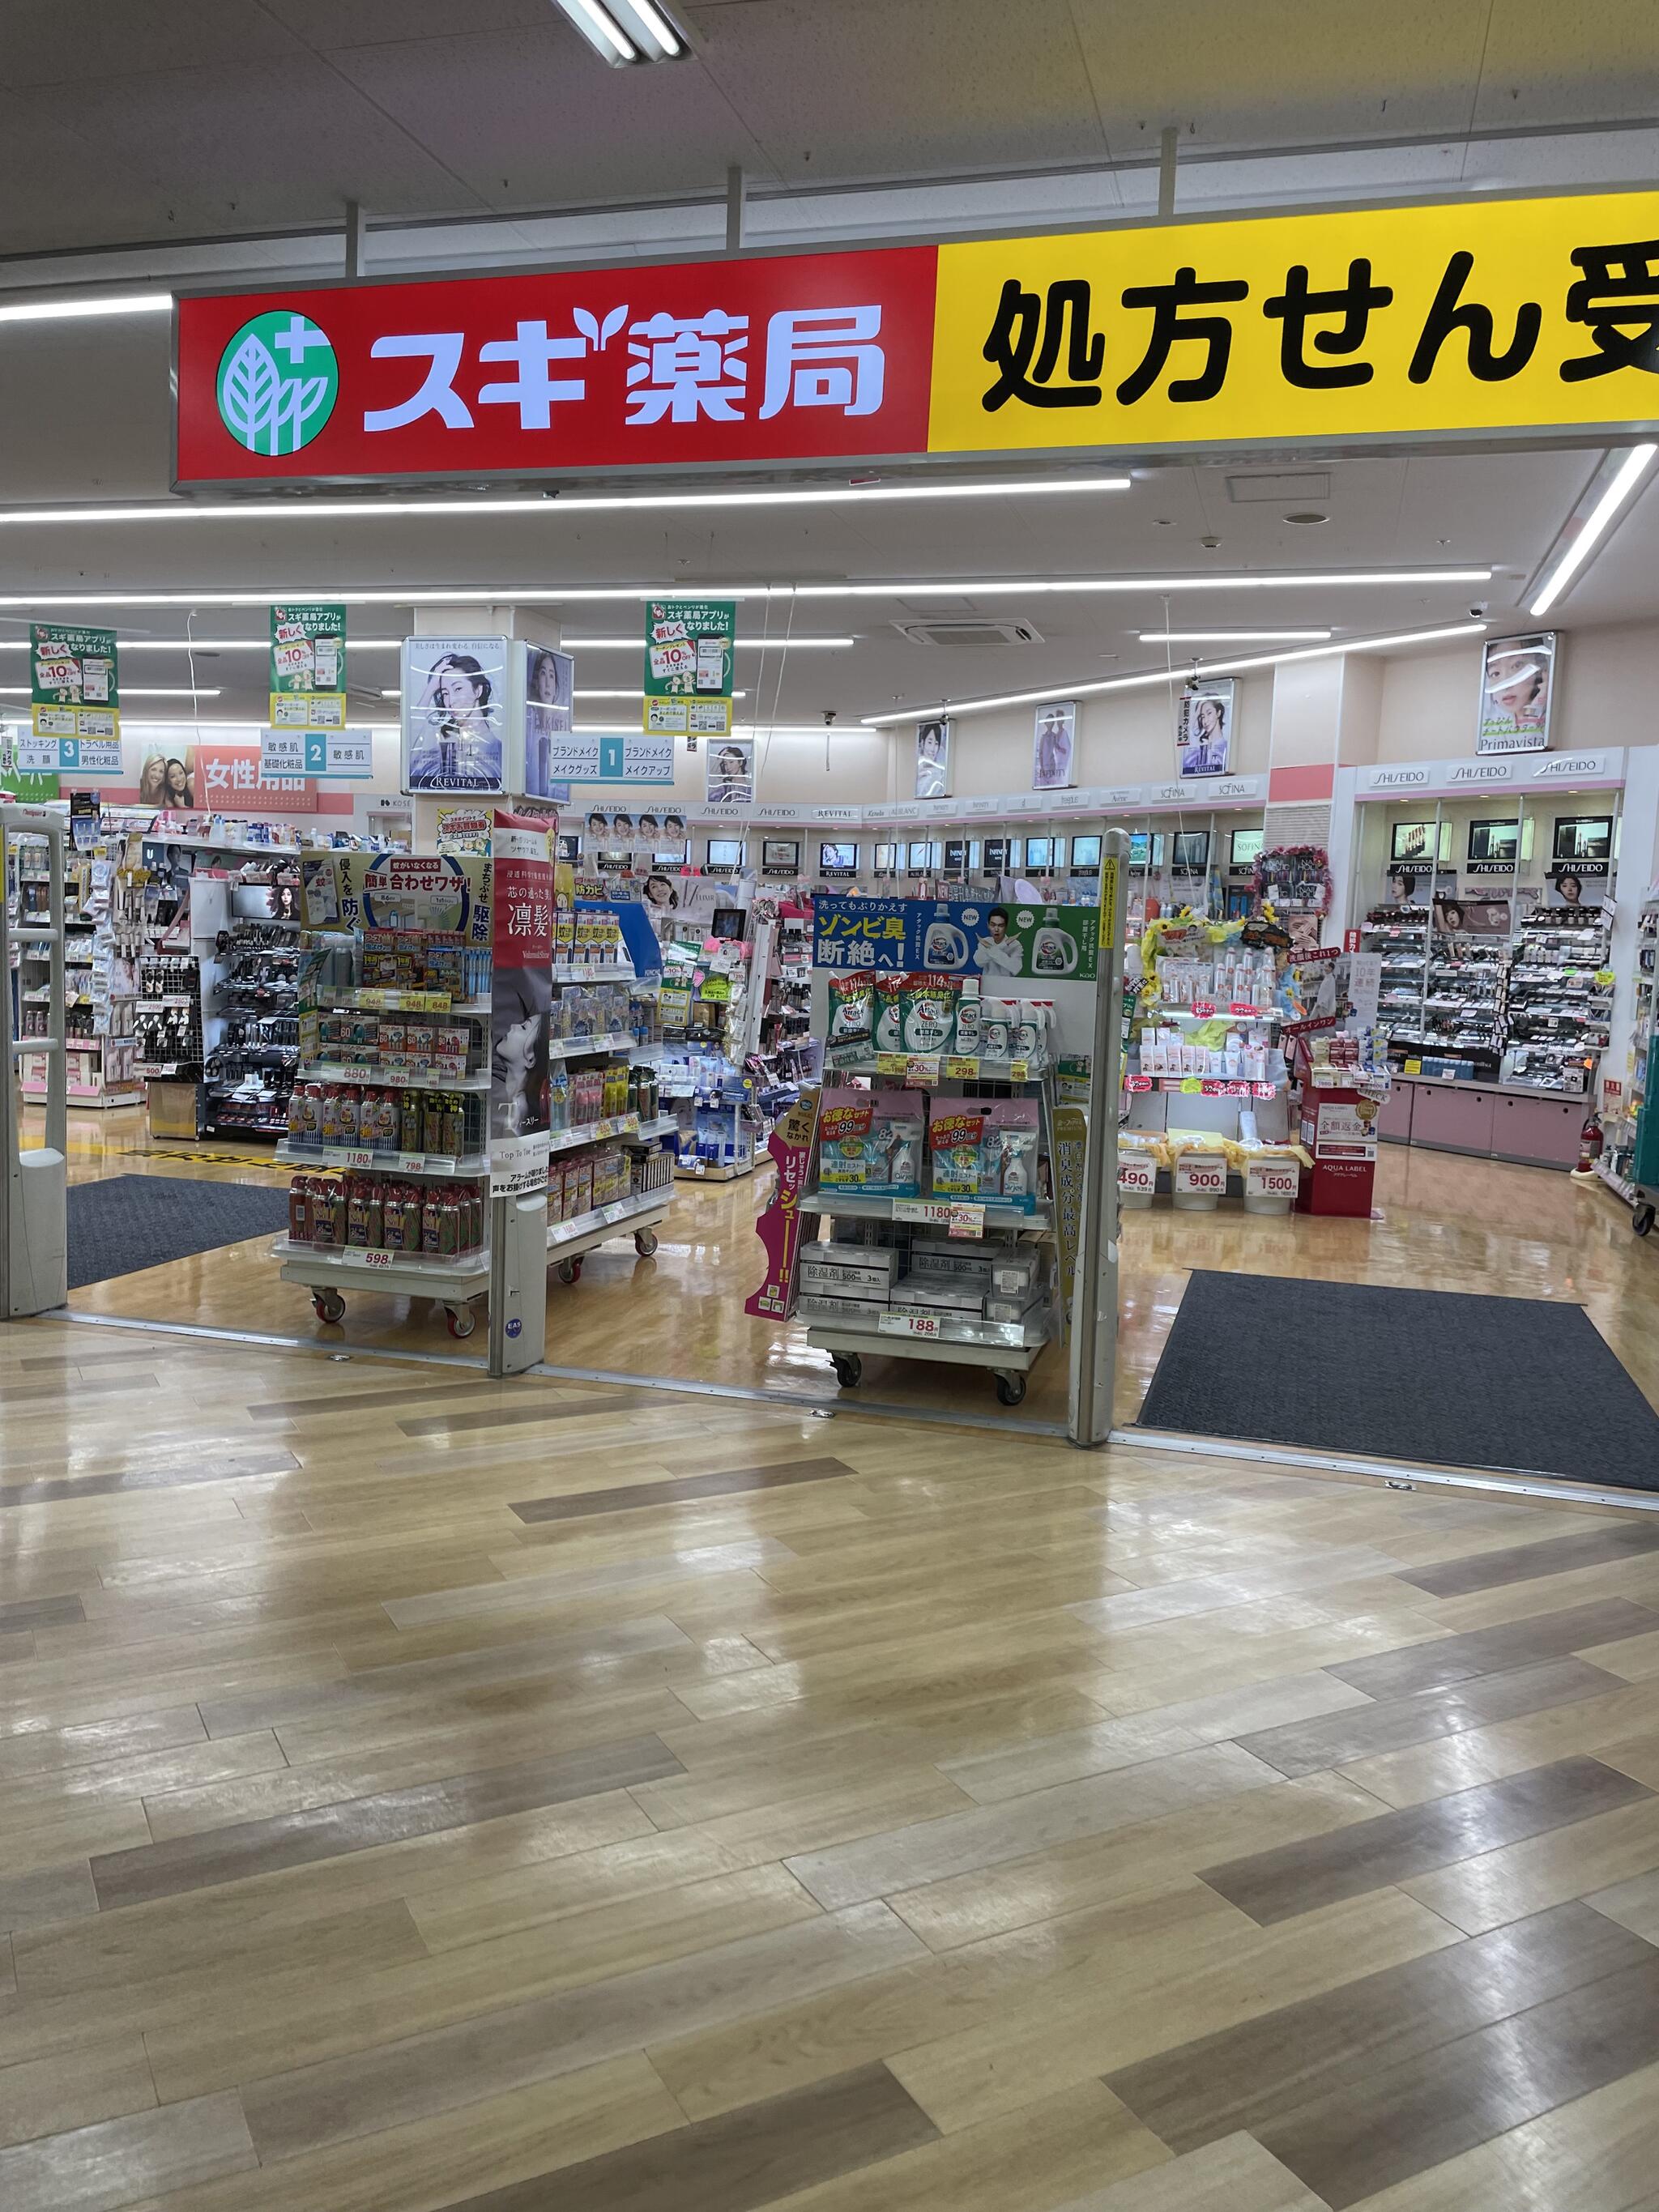 スギ薬局 神戸駅前店の代表写真1